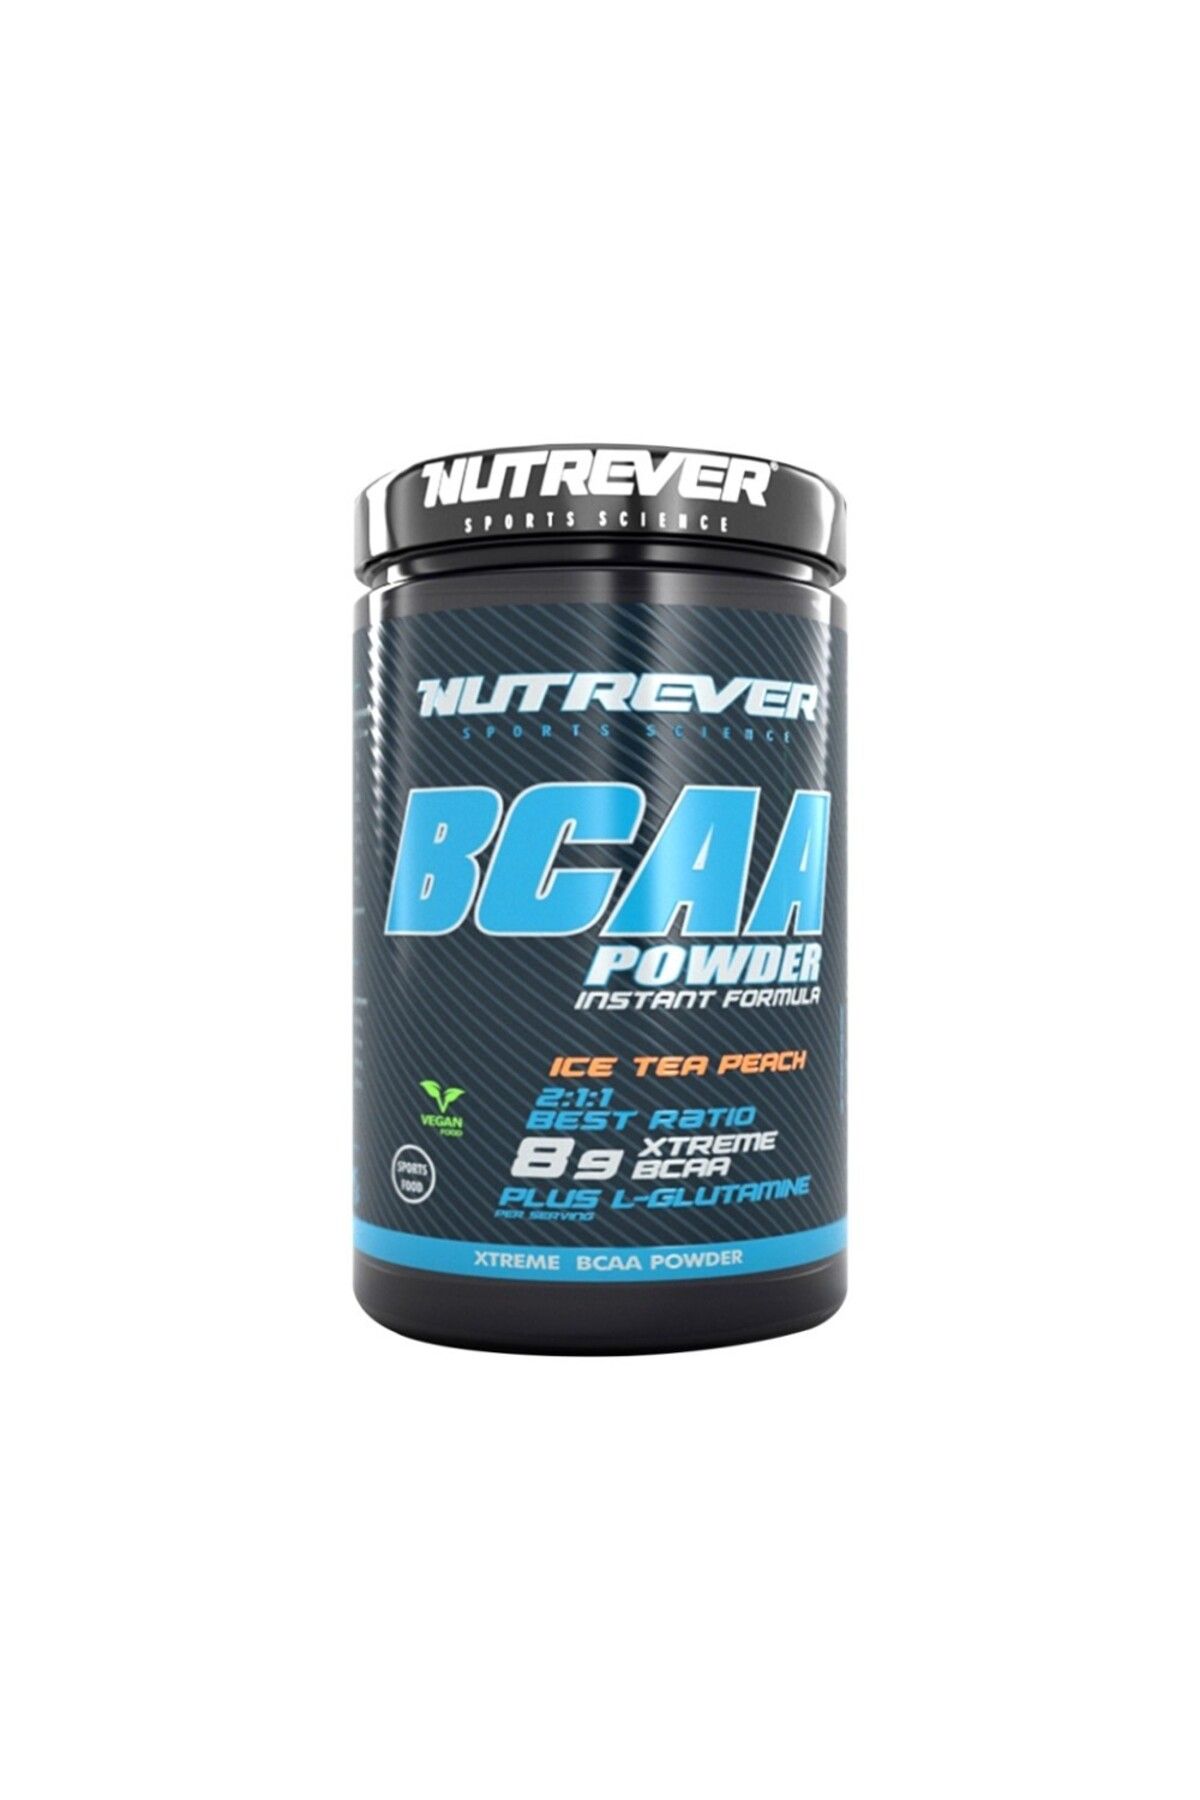 Nutrever Bcaa powder 500G